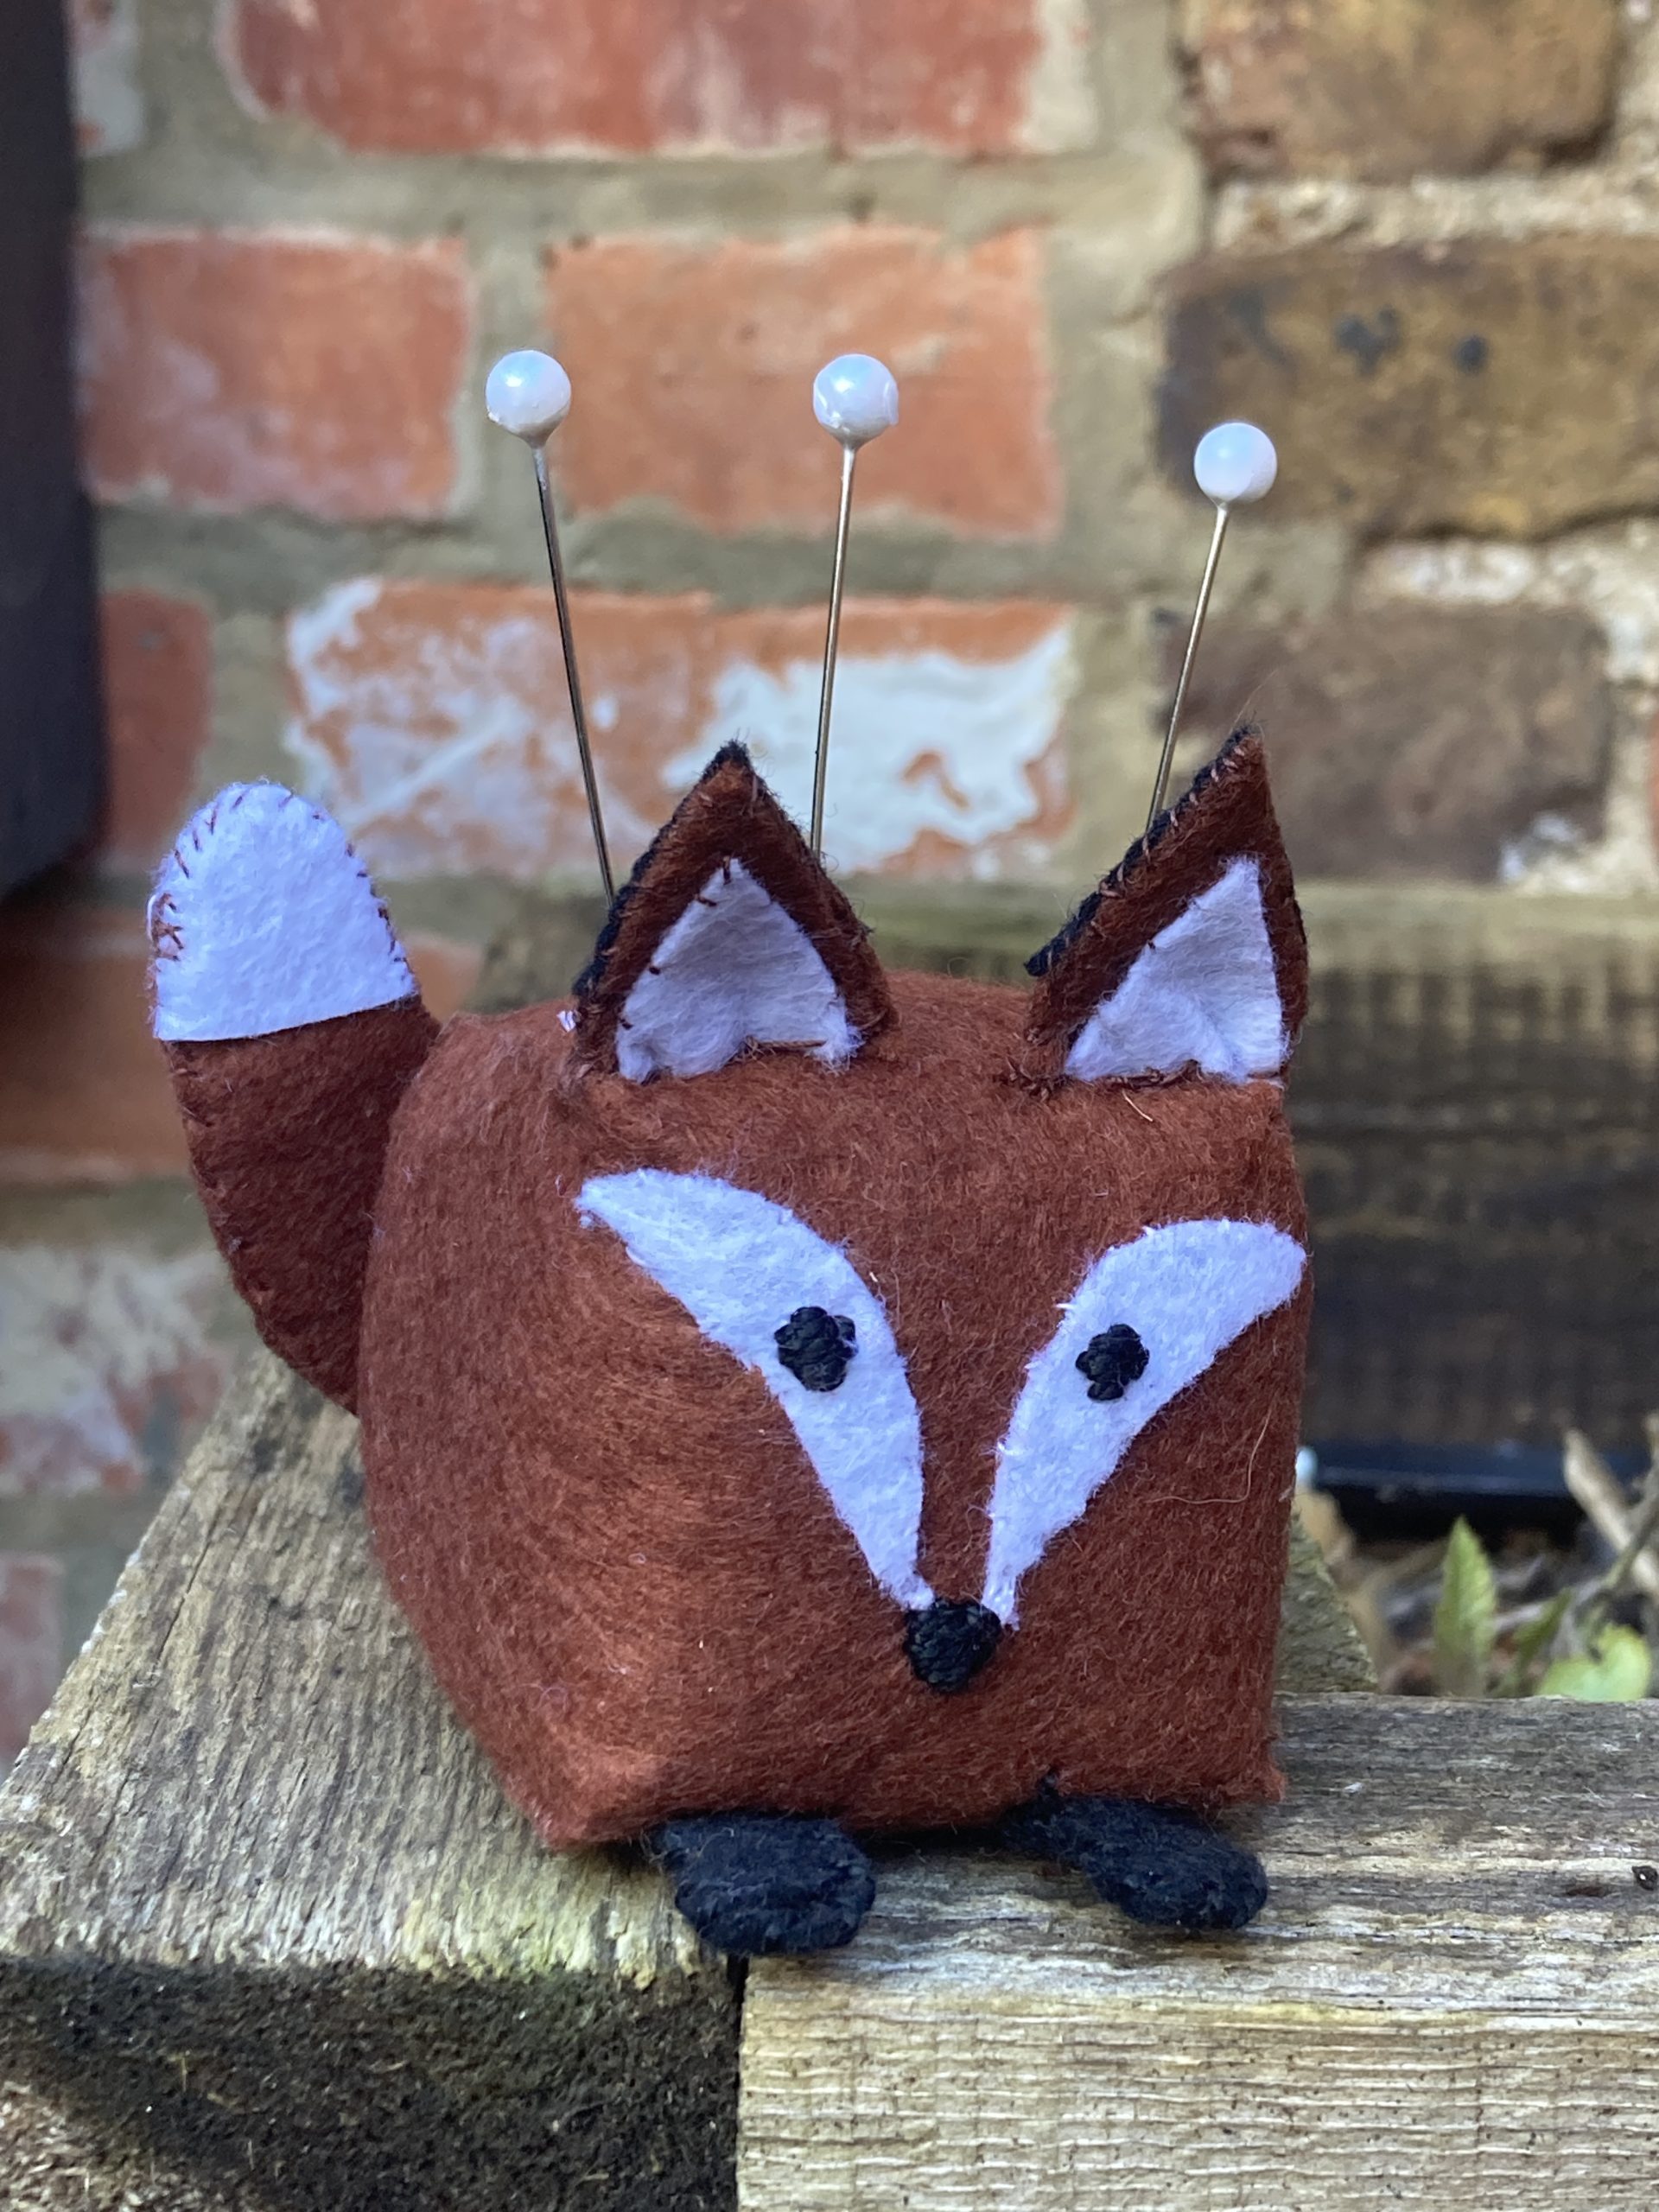 How to make a foxy pin cushion